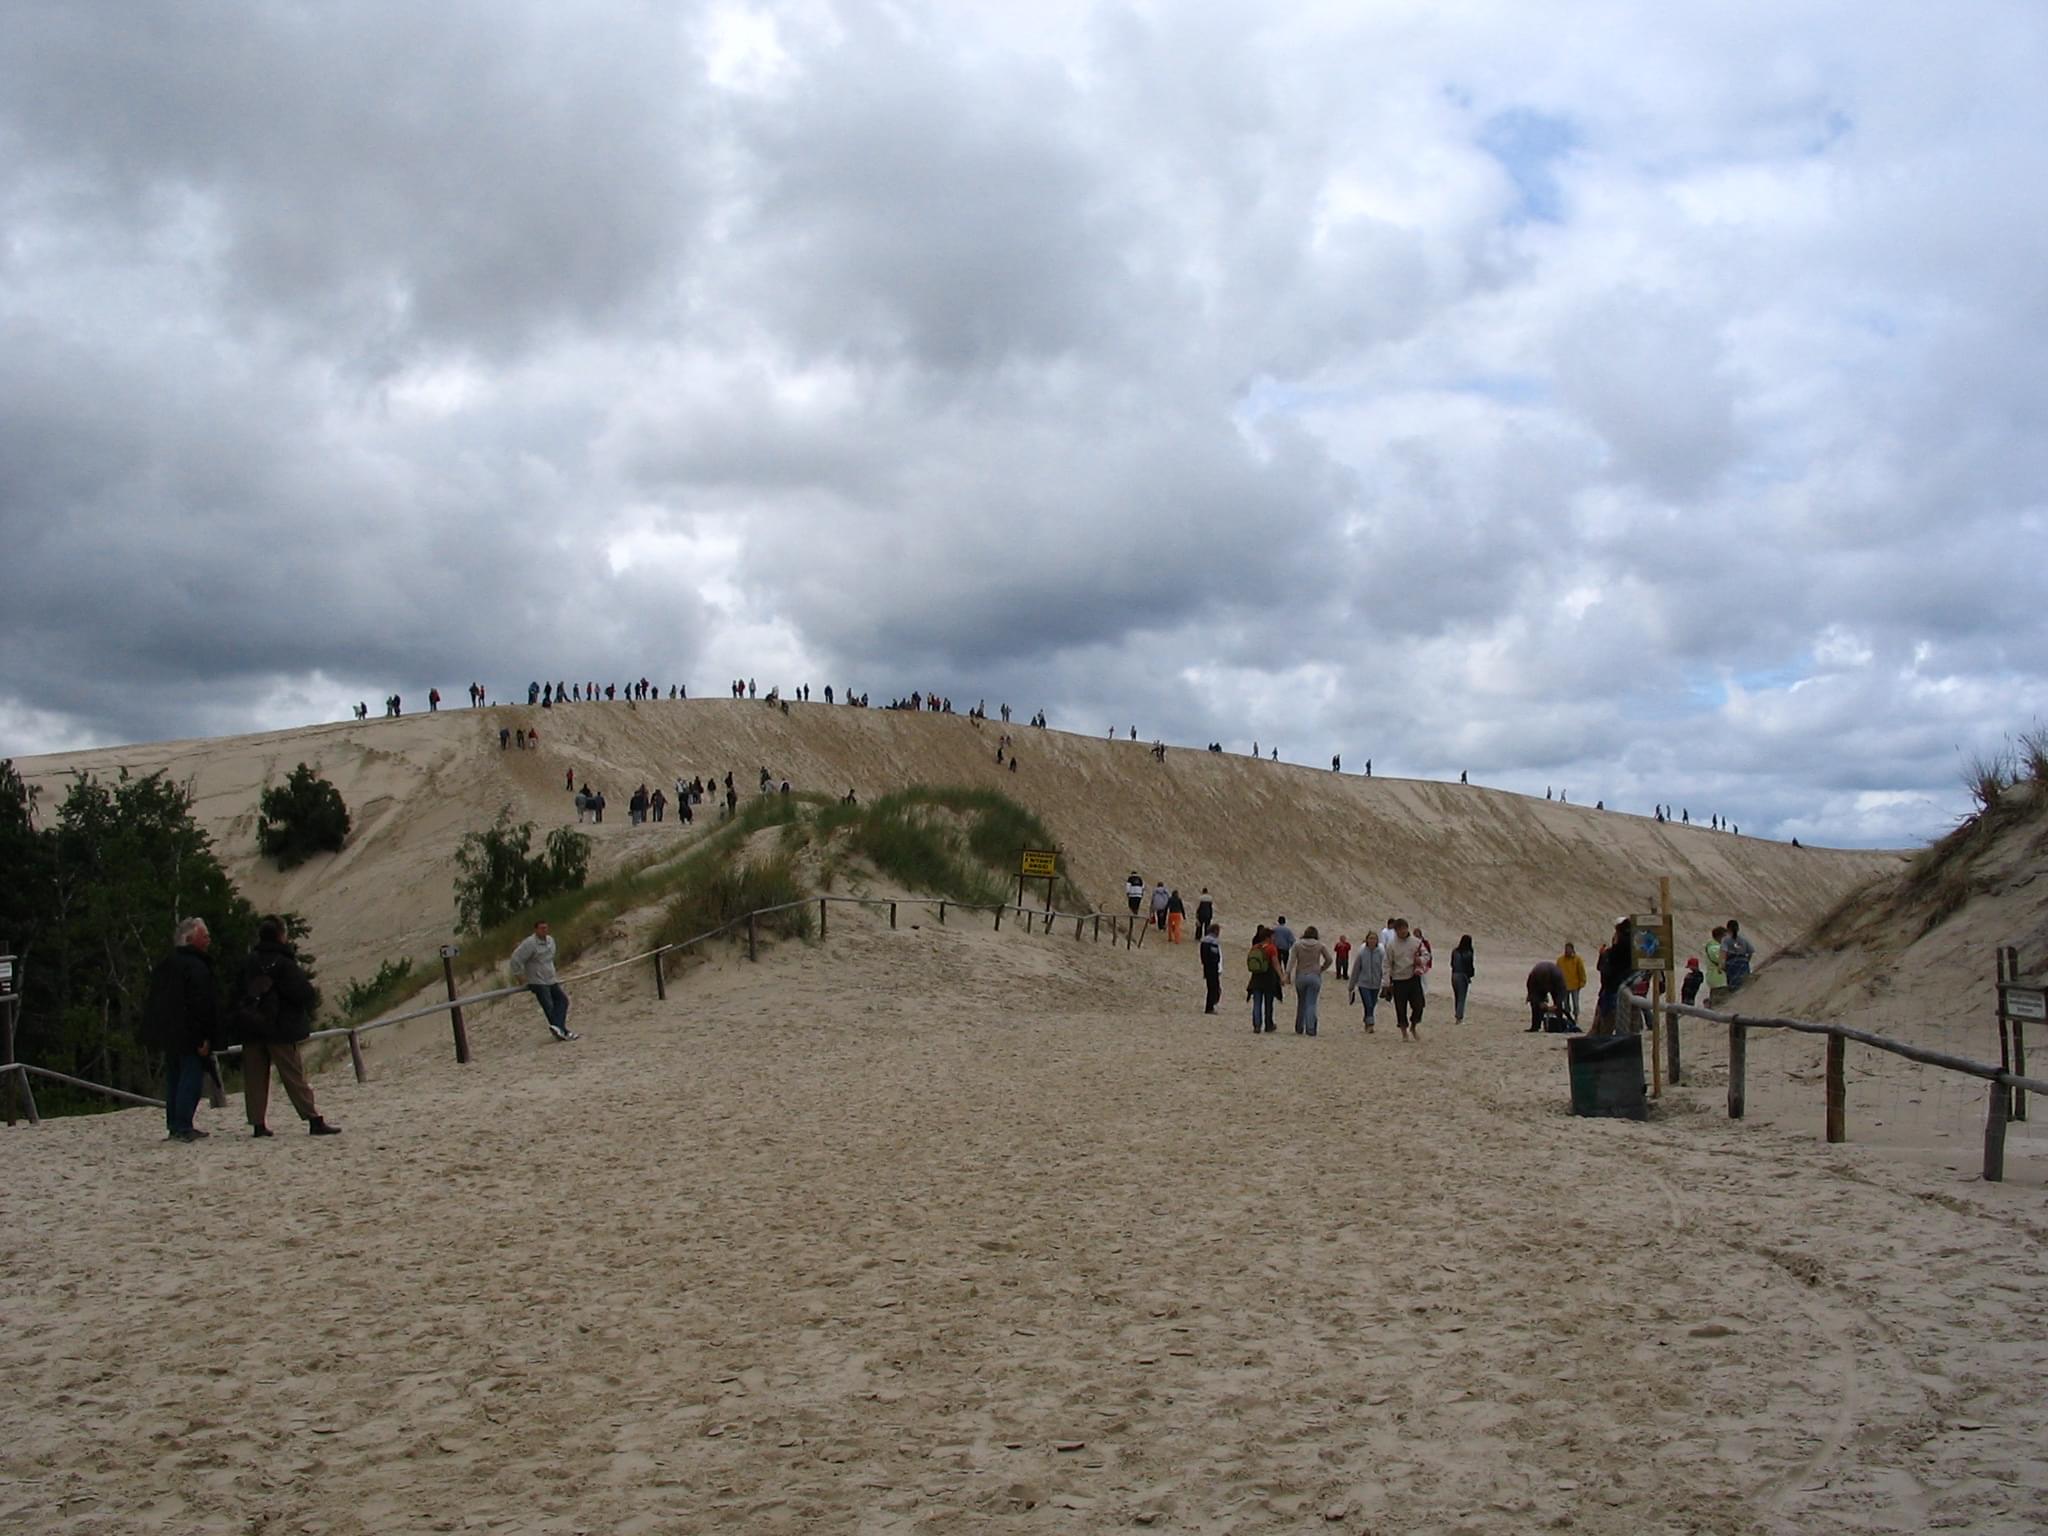 Information about Slawinsky sand dunes in Poland - Information about Slawinsky sand dunes in Poland